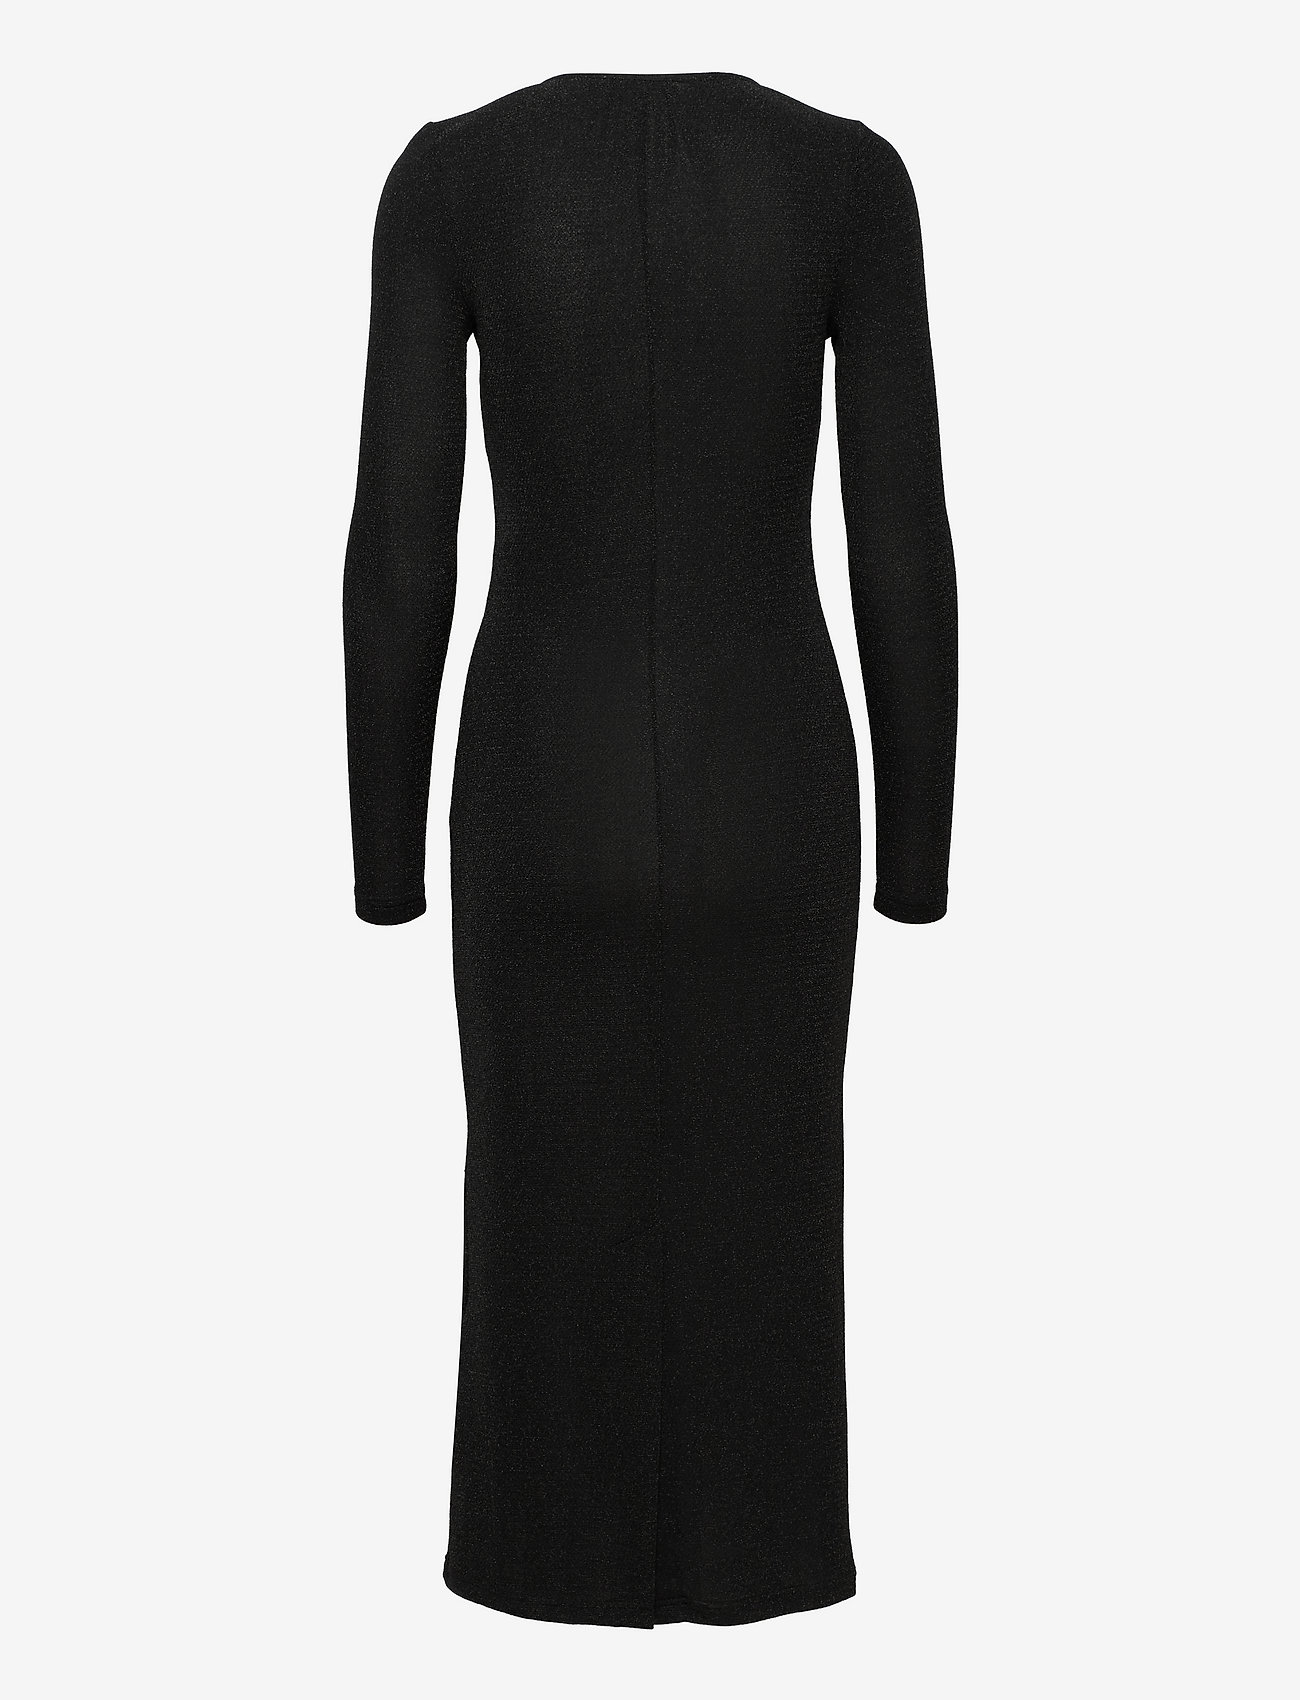 bzr - Luella Ida dress - etuikleider - black - 1